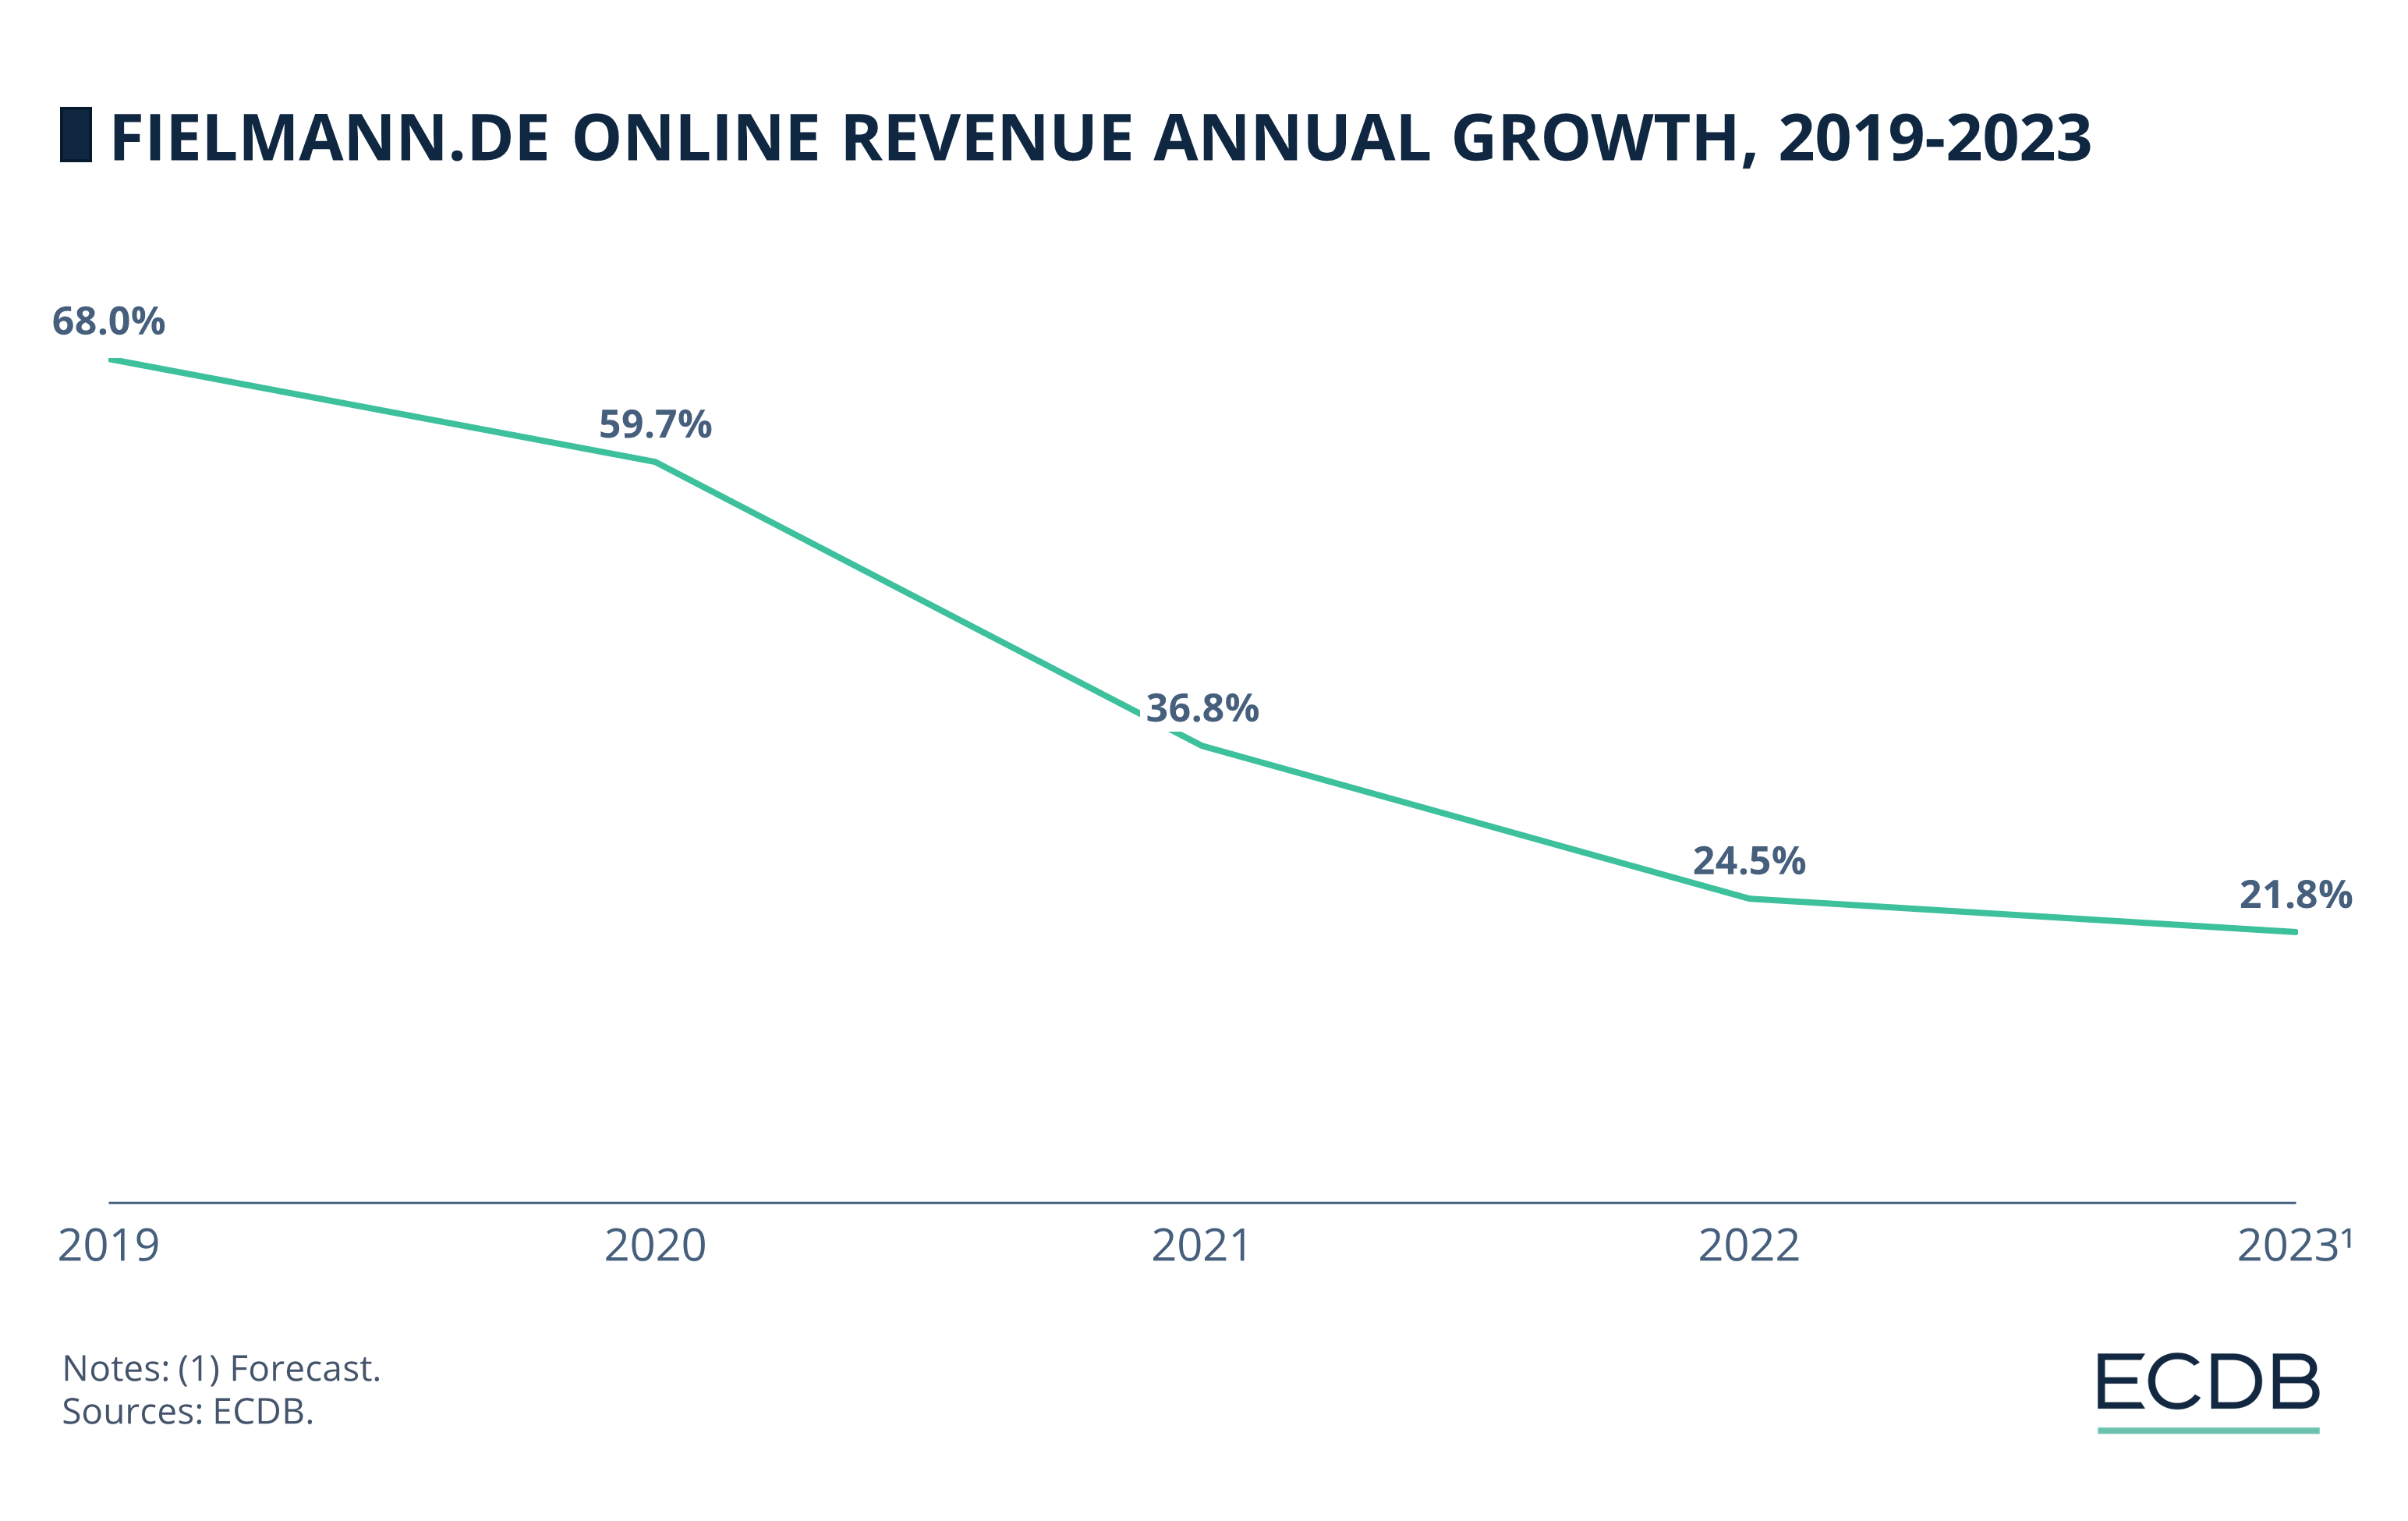 Fielmann.de Online Revenue Annual Growth, 2019-2023